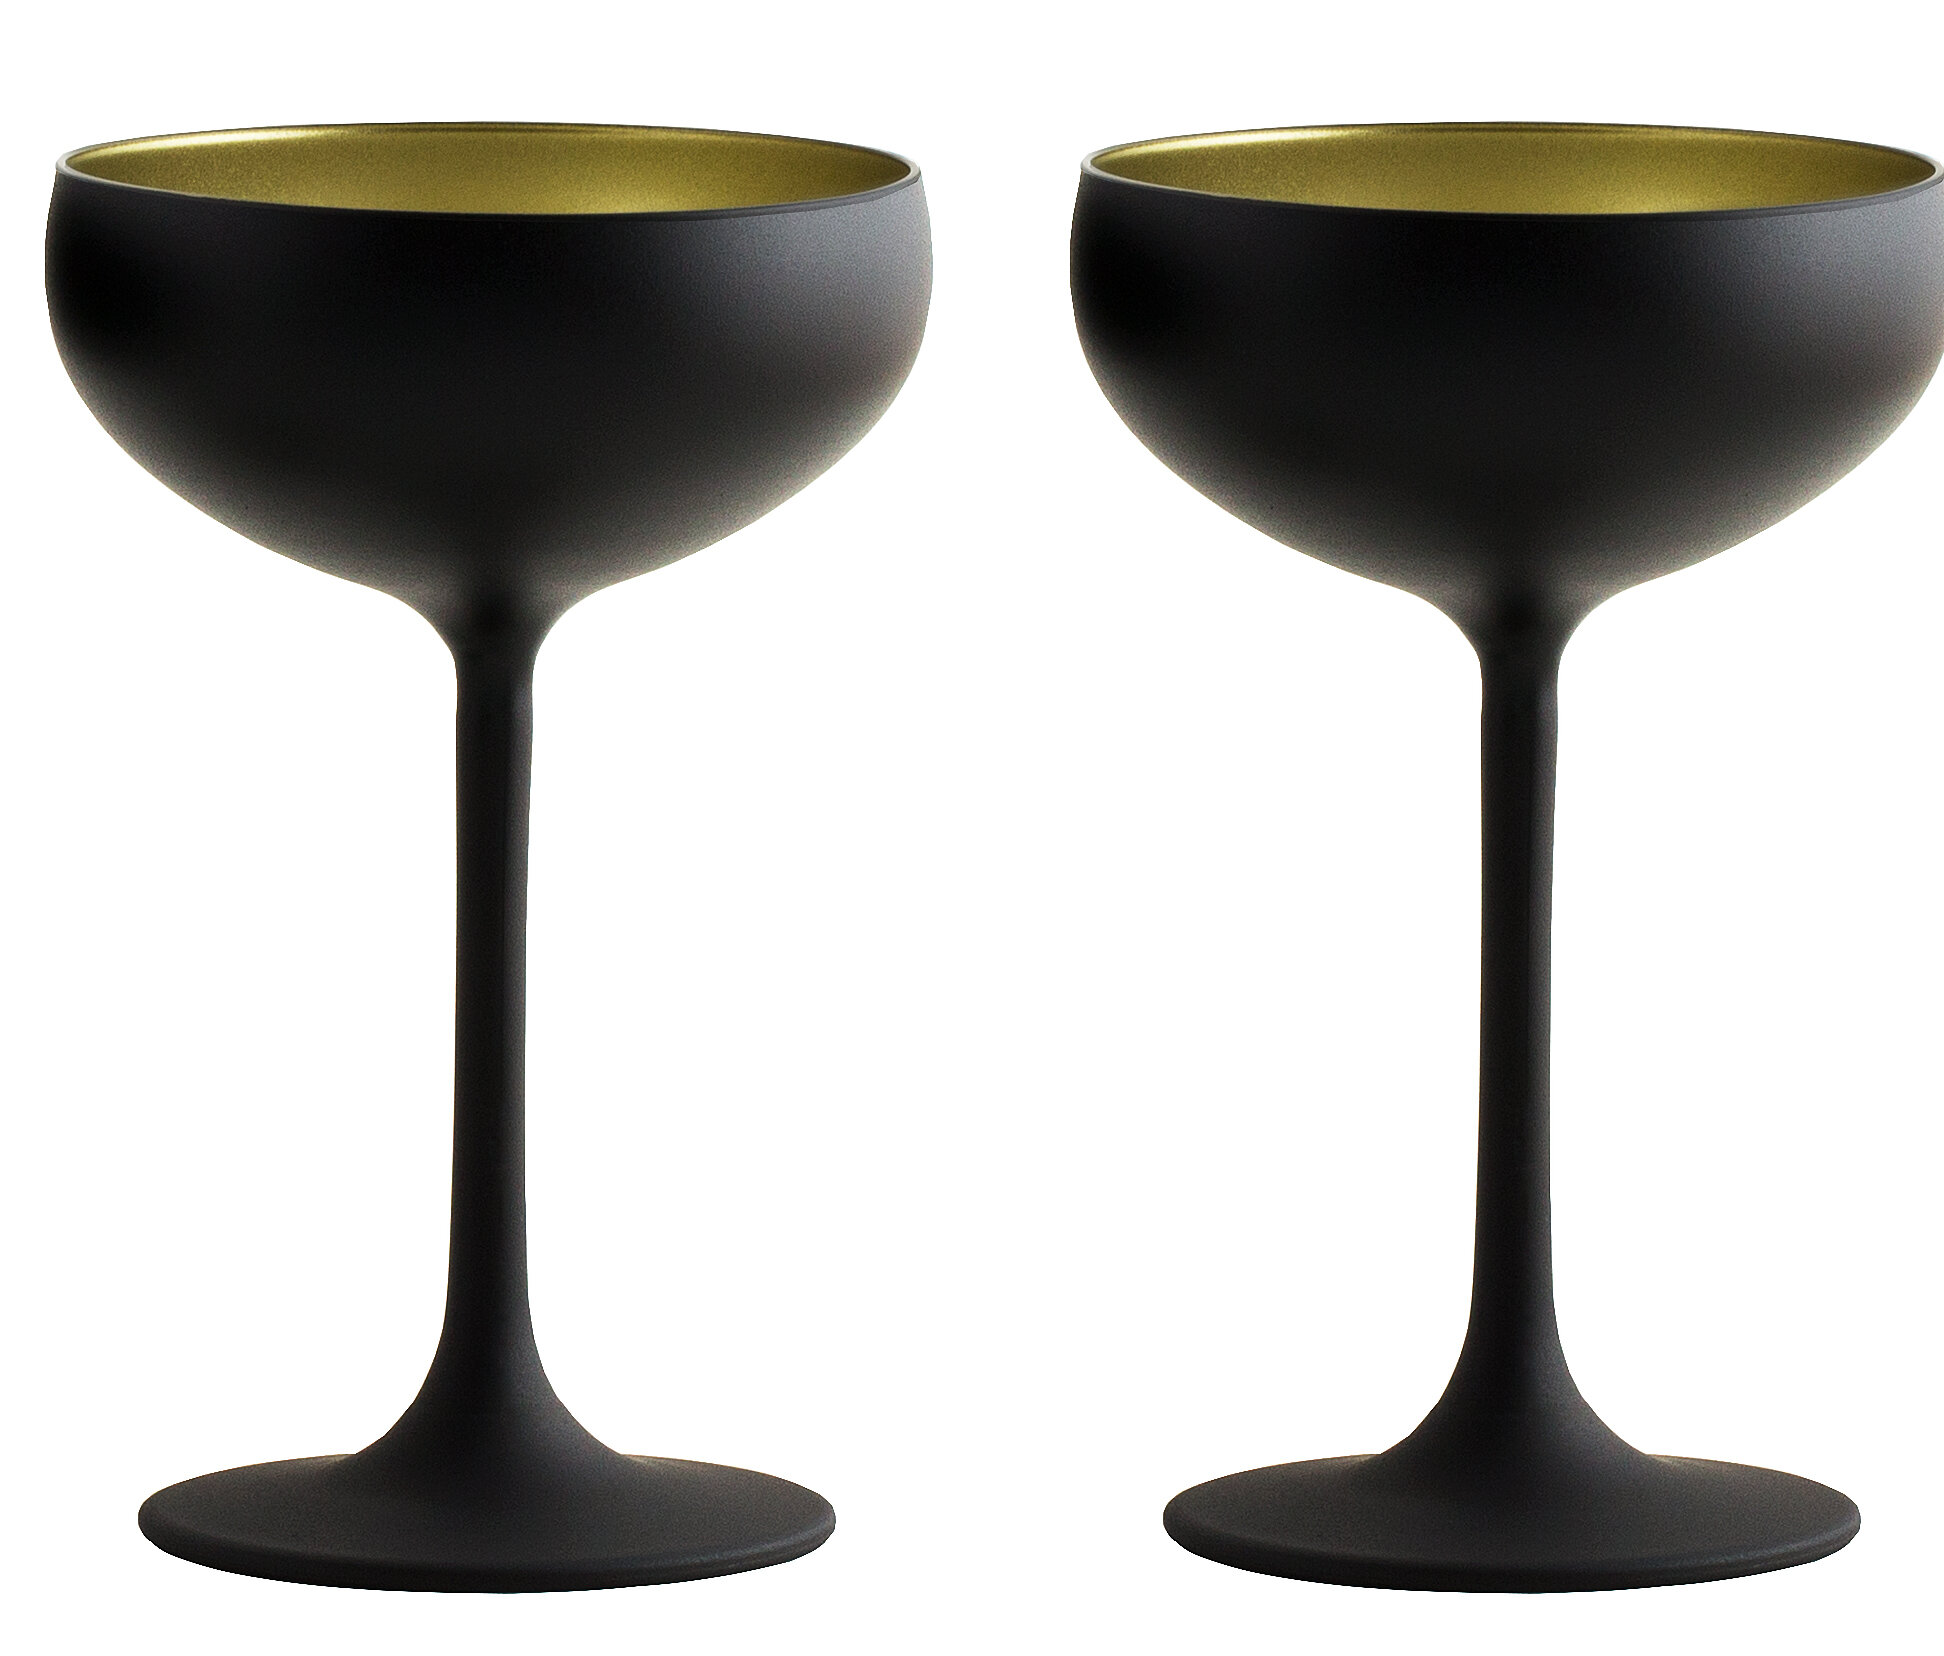 8oz Olympia Crystal Martini Glasses - Set of 2 (Black & Bronze